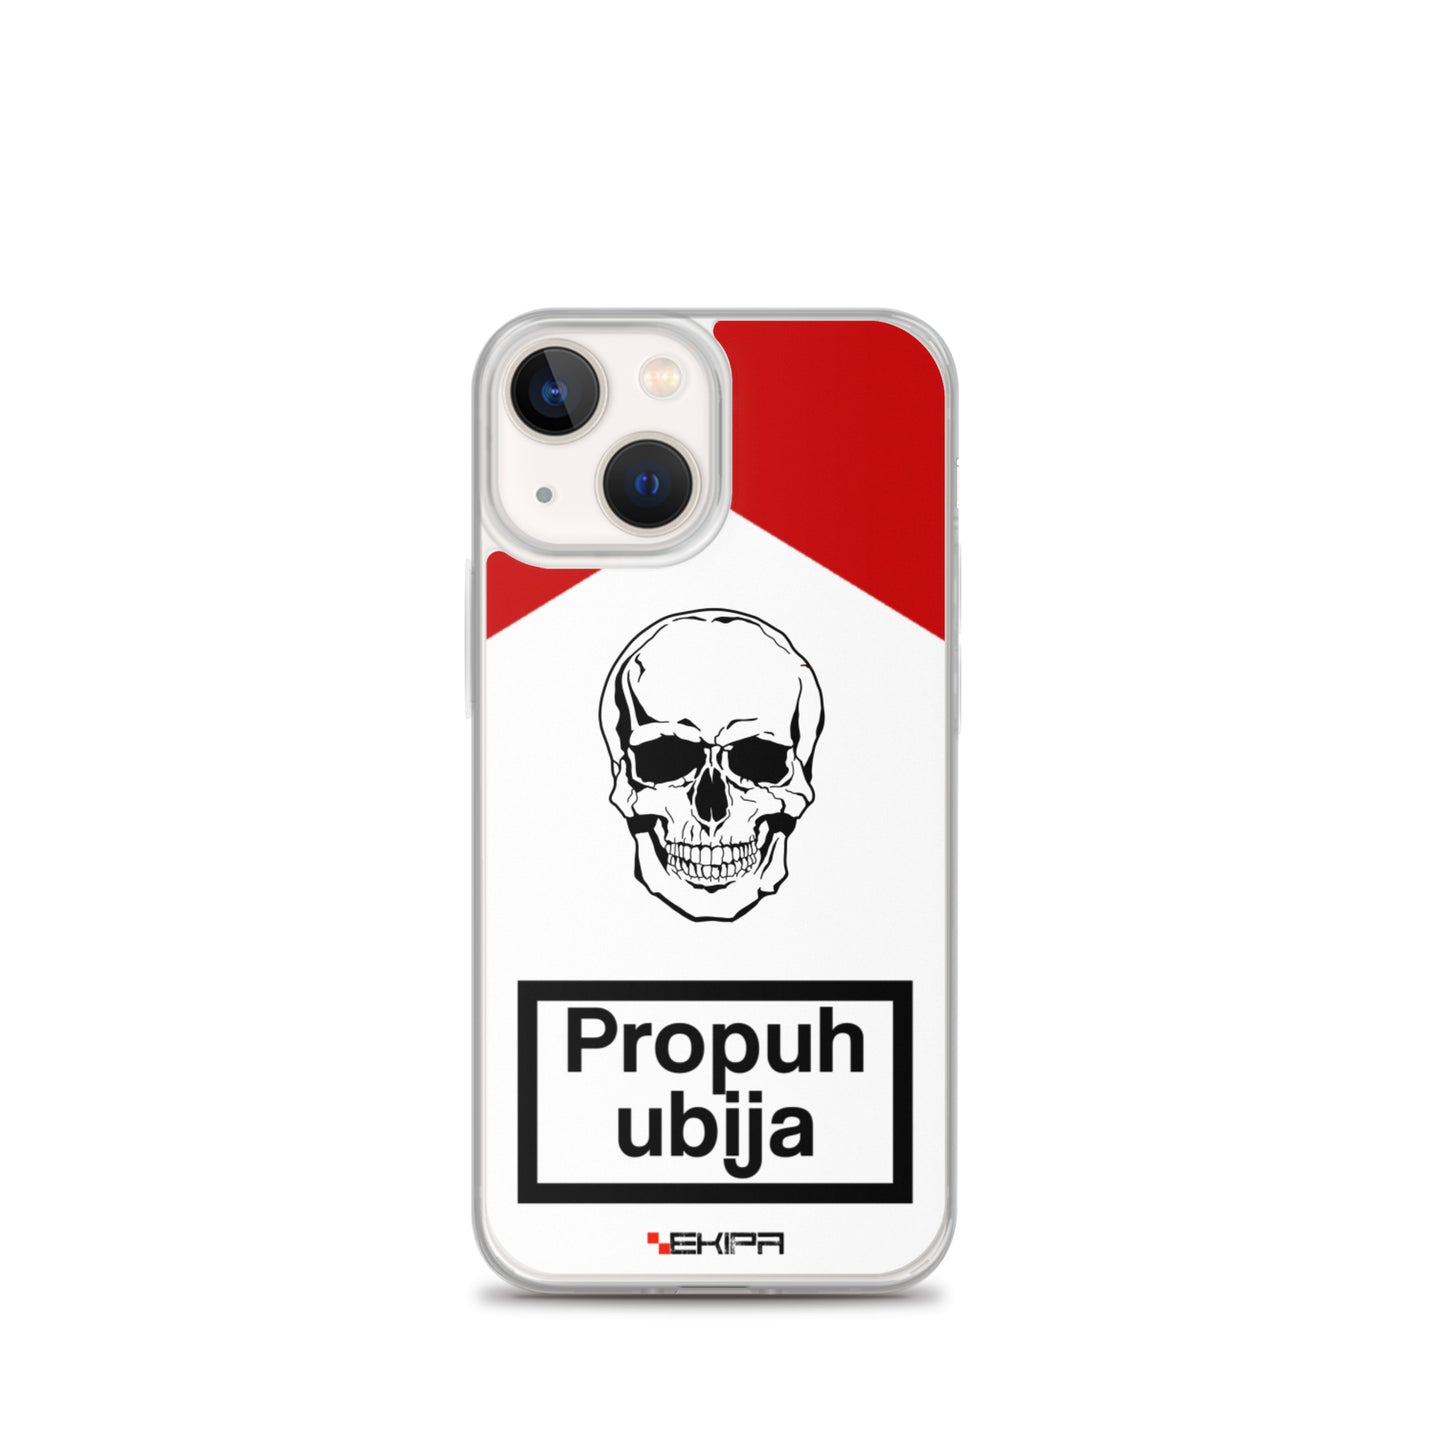 "Propuh ubija" - iPhone case